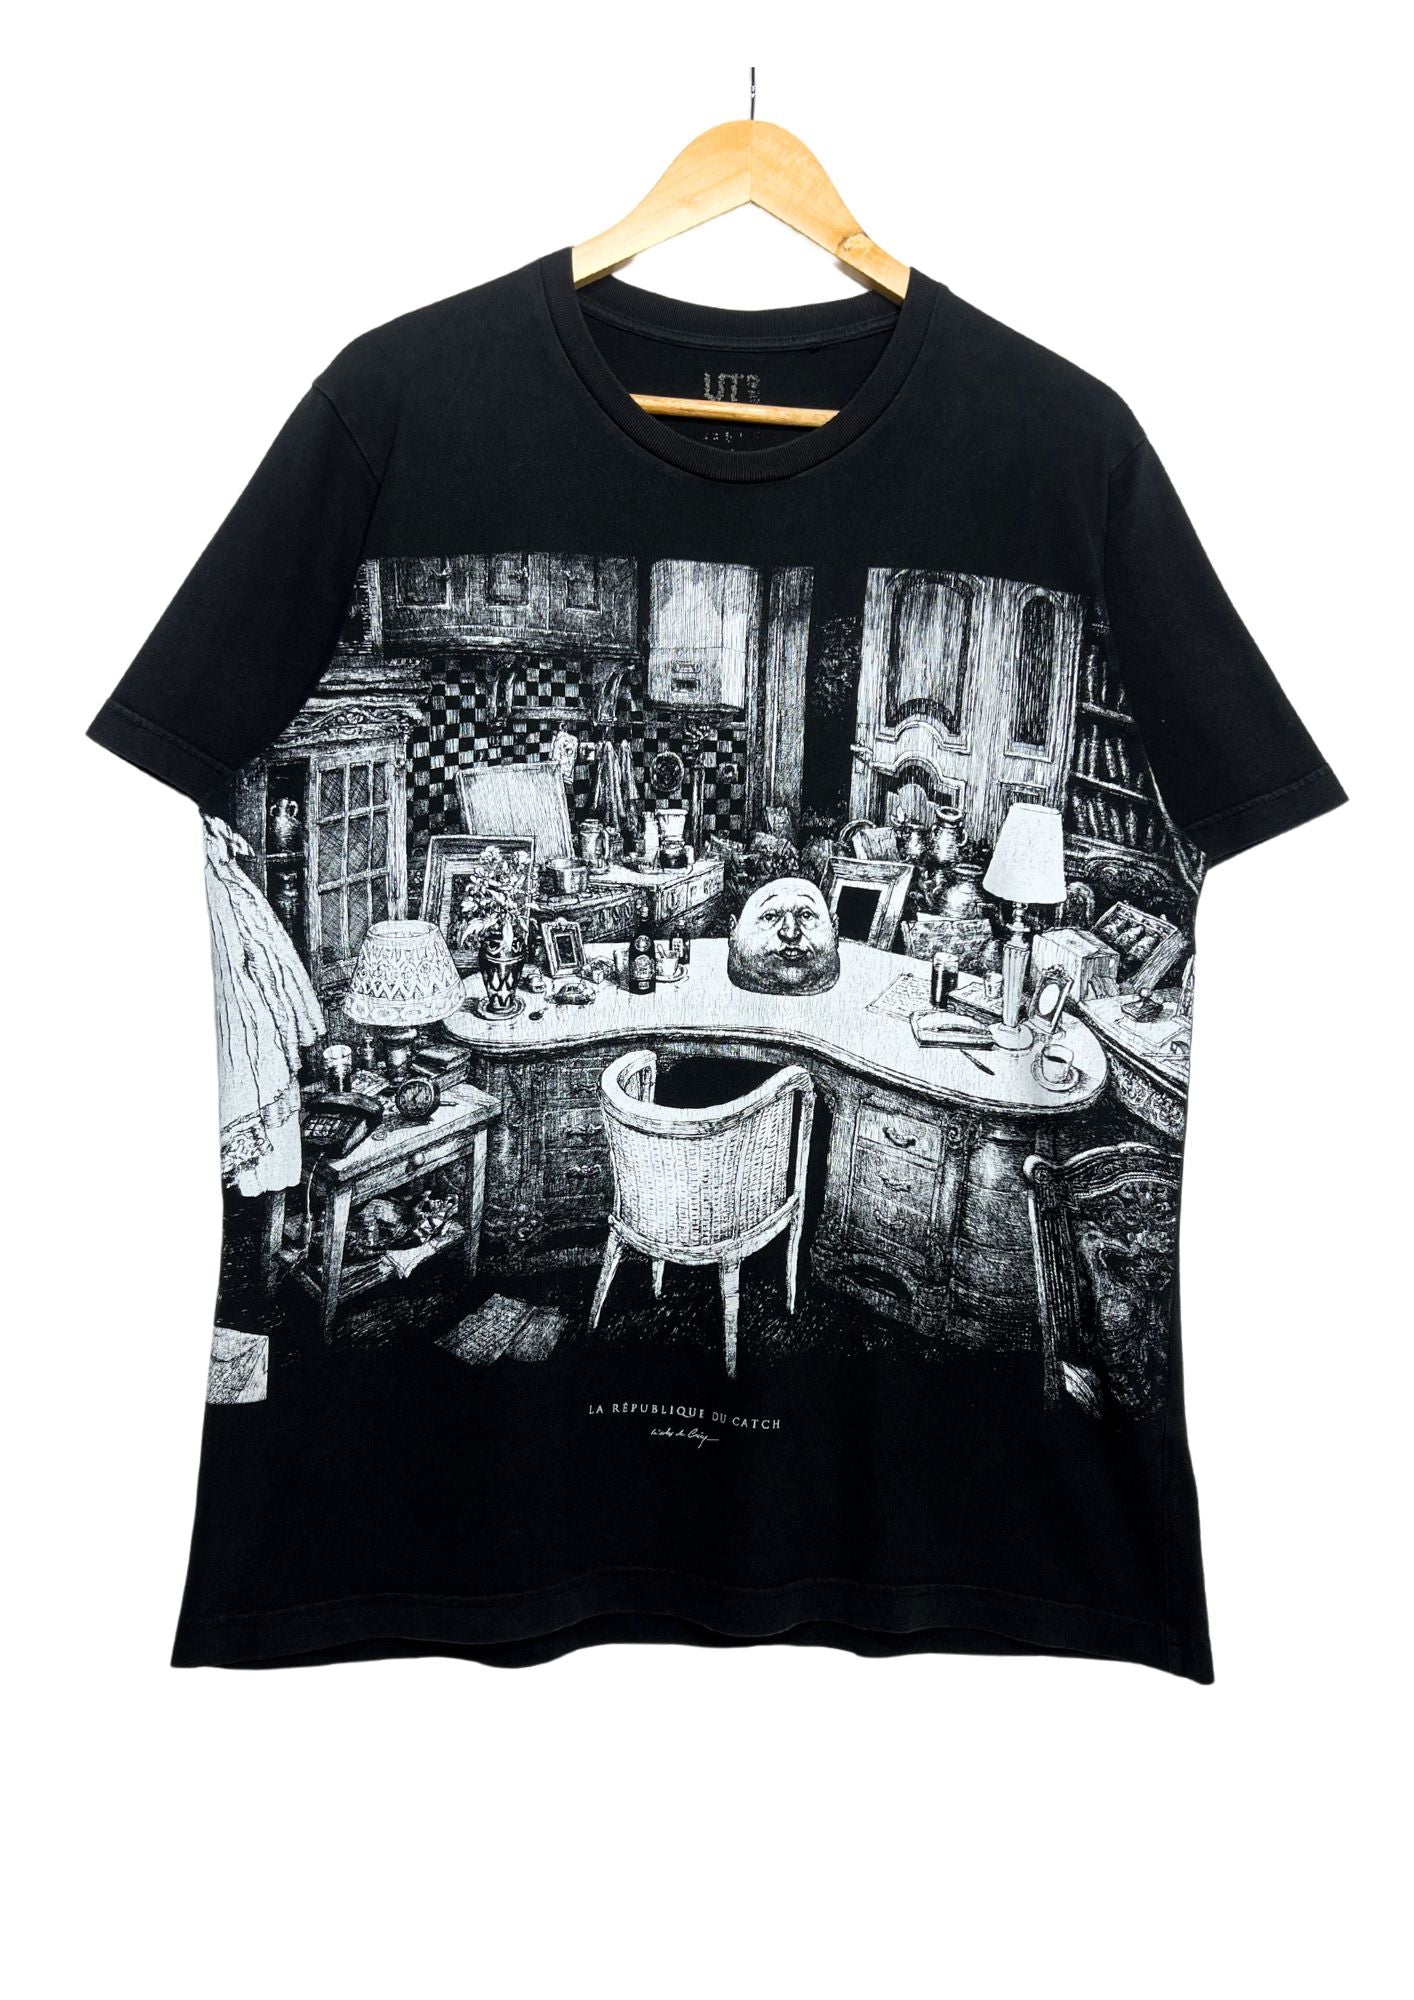 2015 Taiyo Matsumoto x Nicolas de Crecy La République du Catch T-shirt